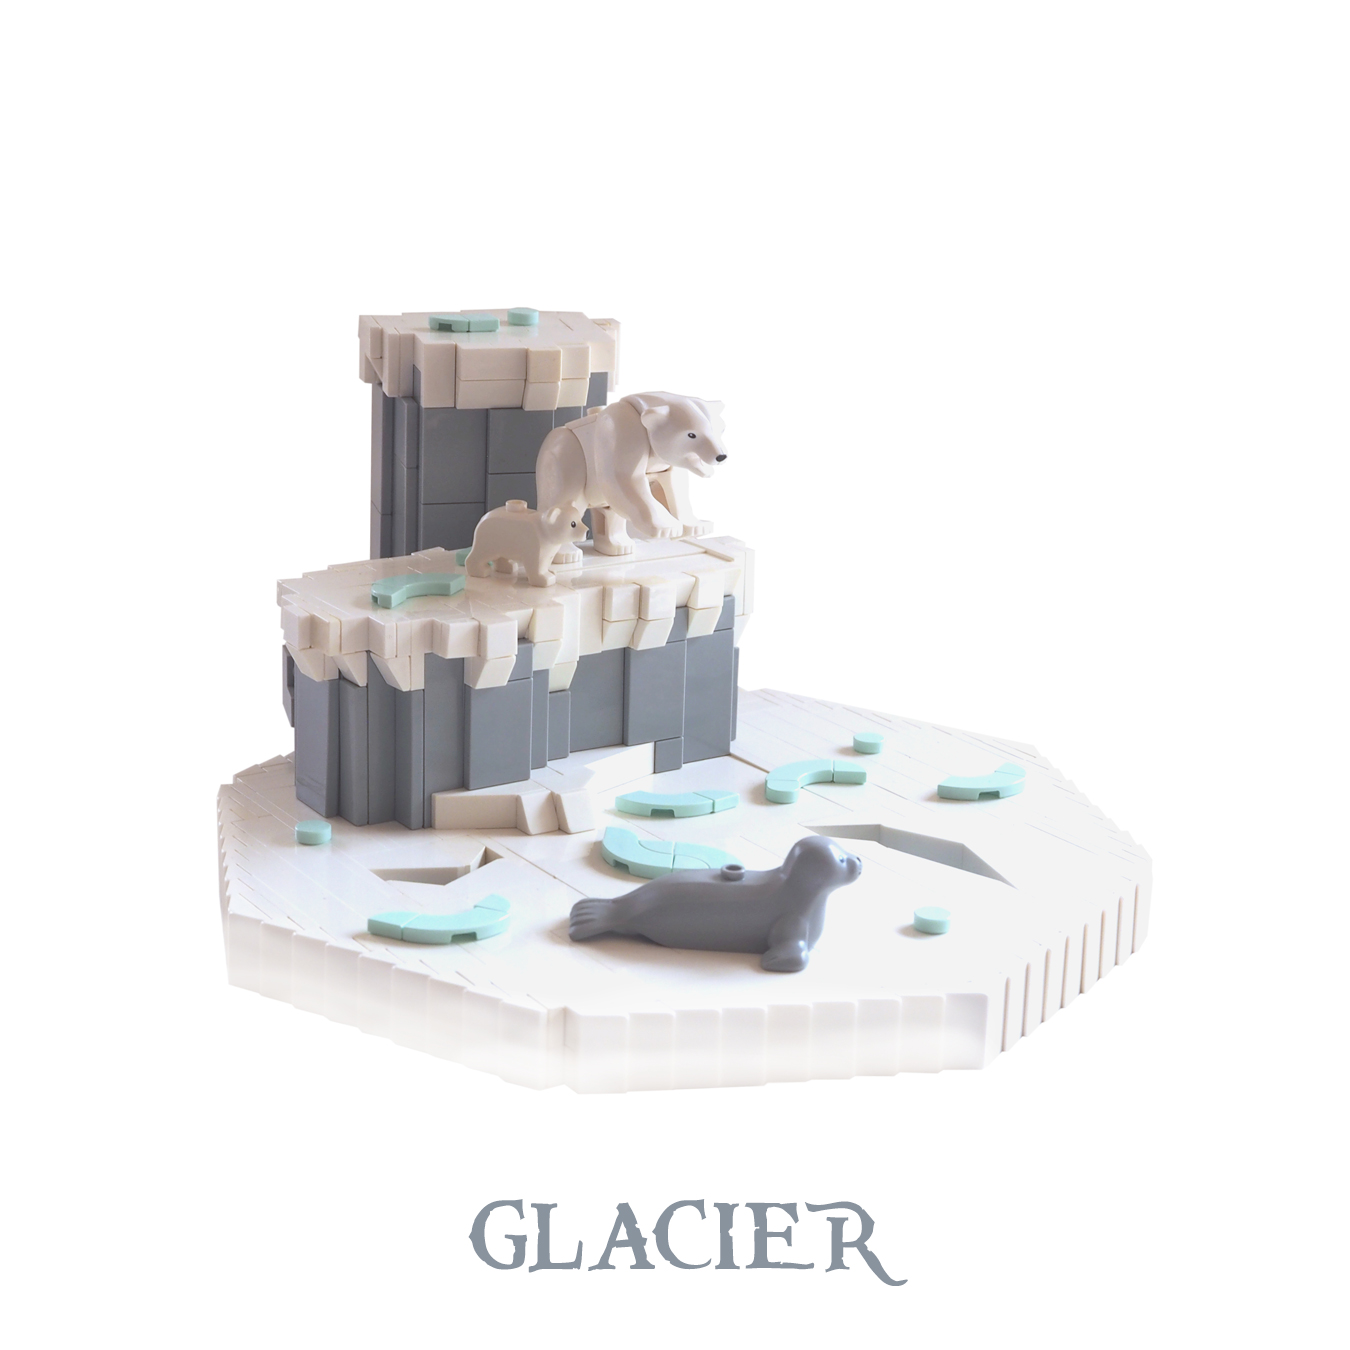 hex-glacier-labeled.jpg